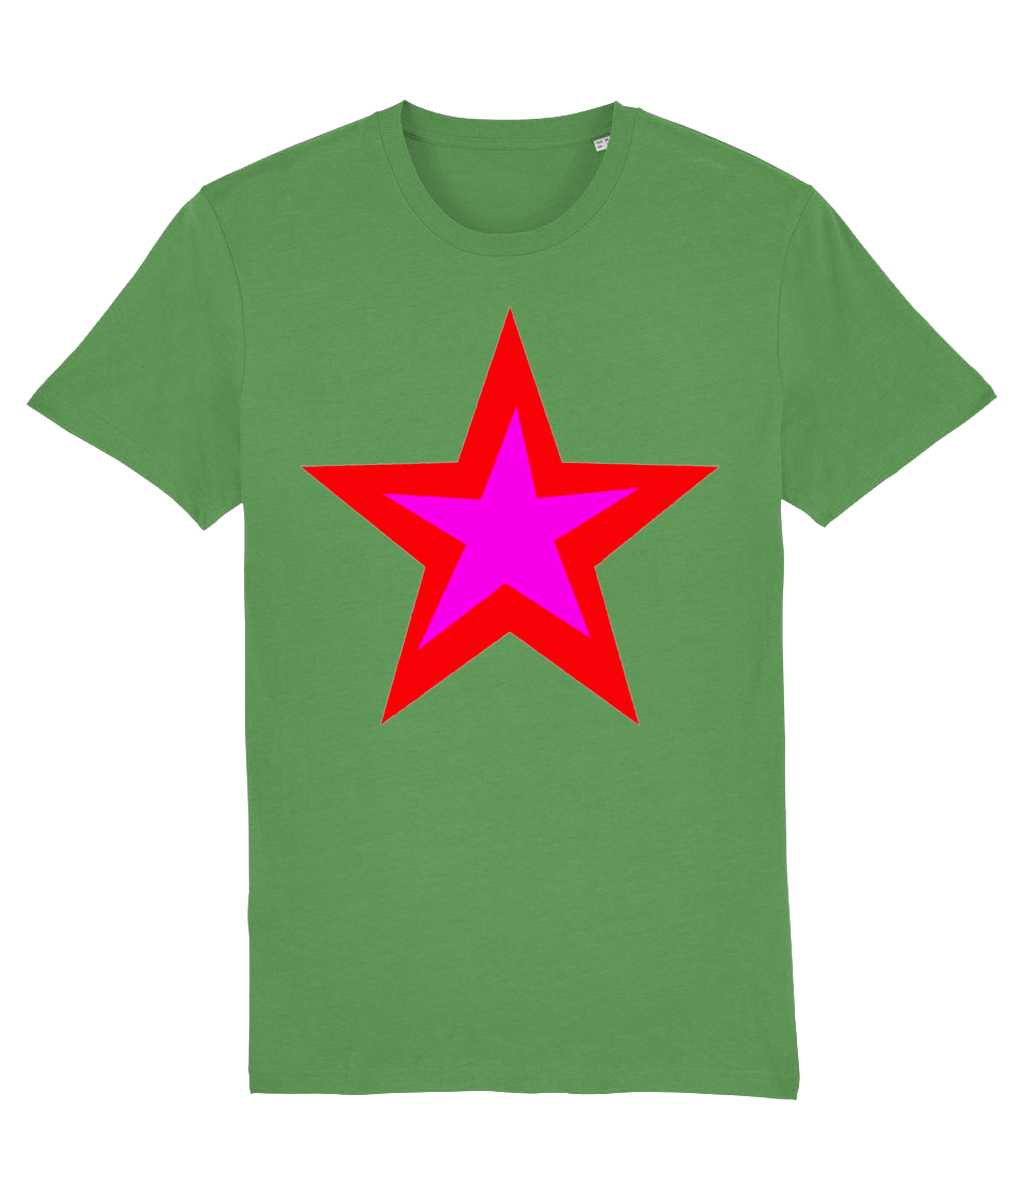 Star play organic T-shirt Cherchez La Femme brand